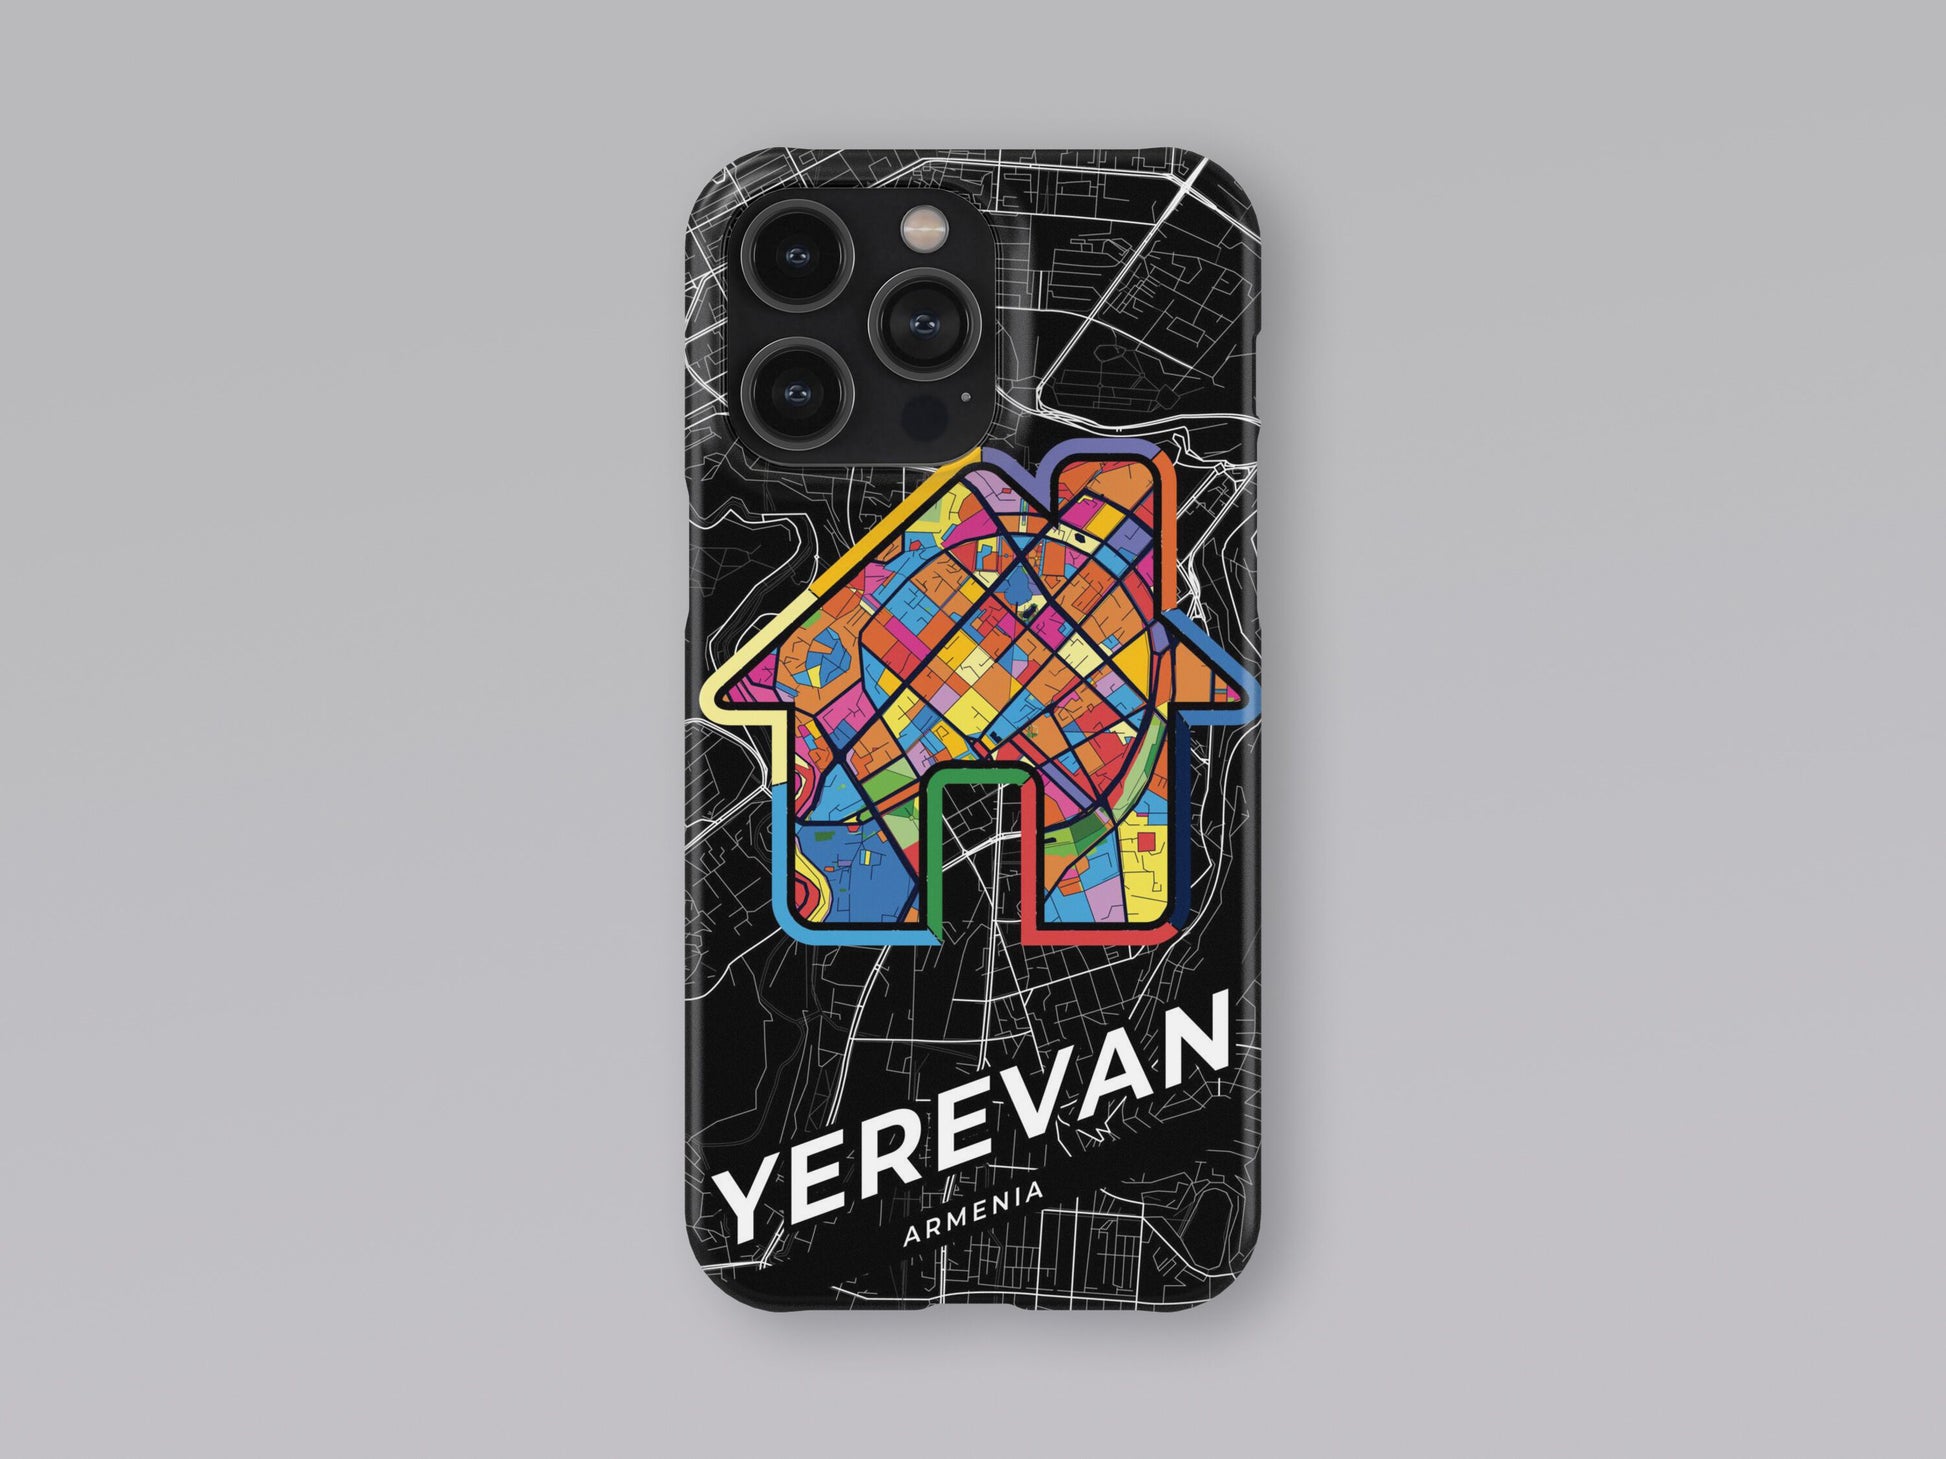 Yerevan Armenia slim phone case with colorful icon 3